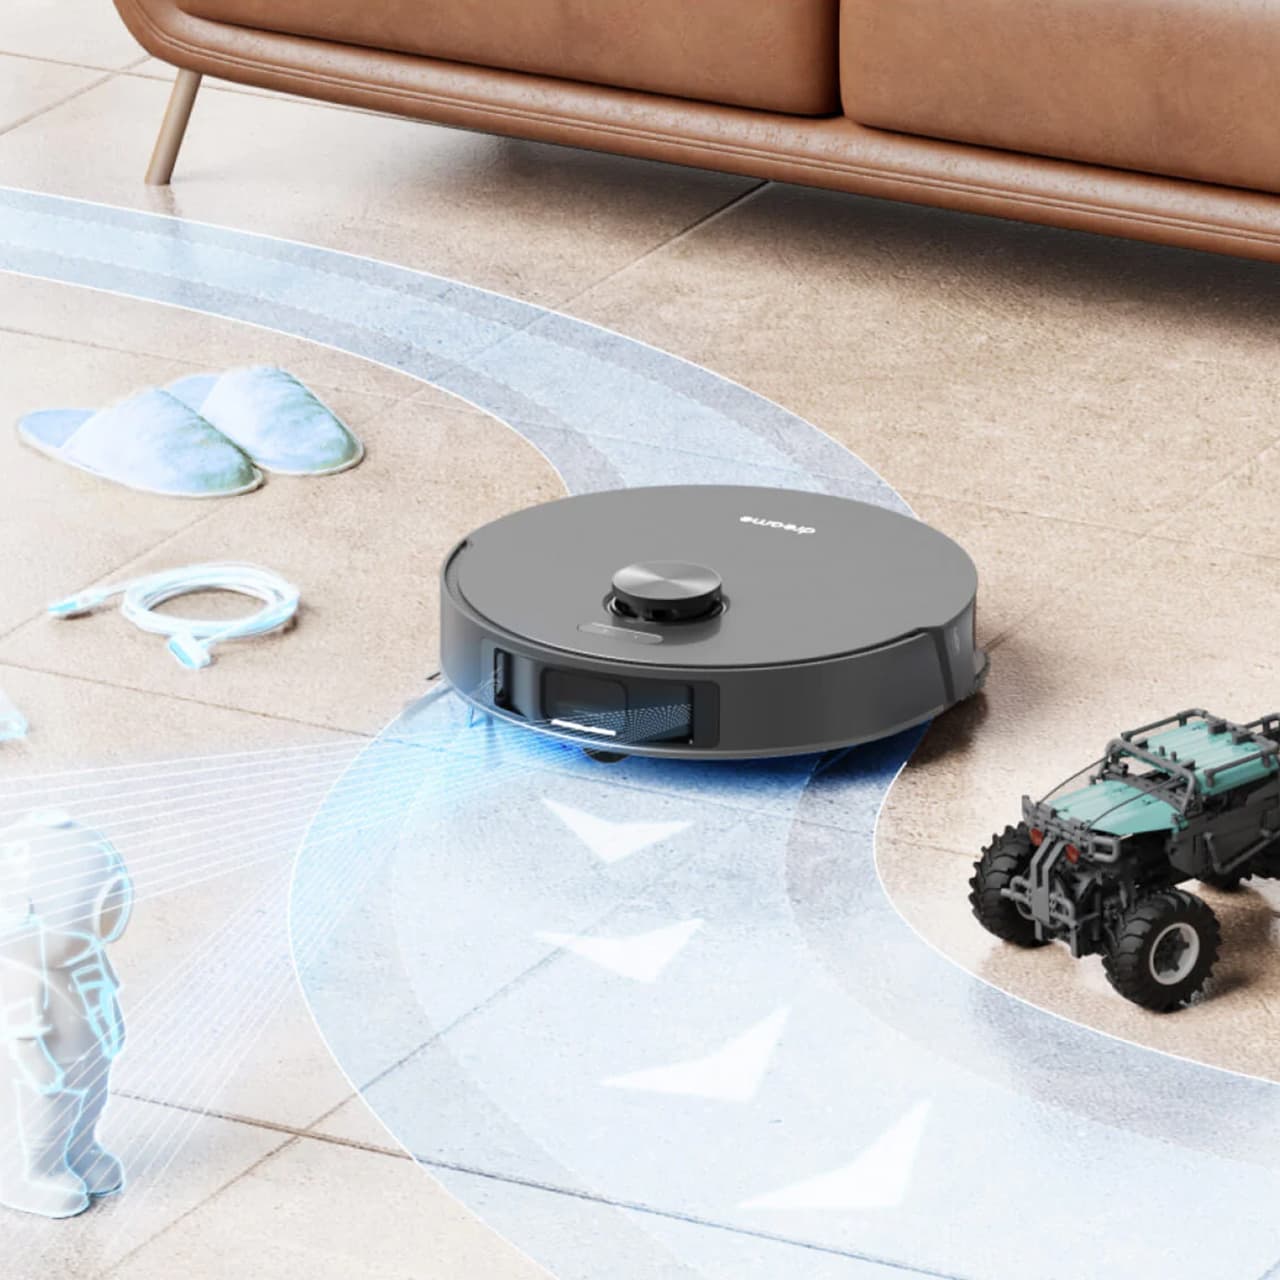 Dreame Bot L10s Pro оснащён 3D-датчиками для распознавания препятствий